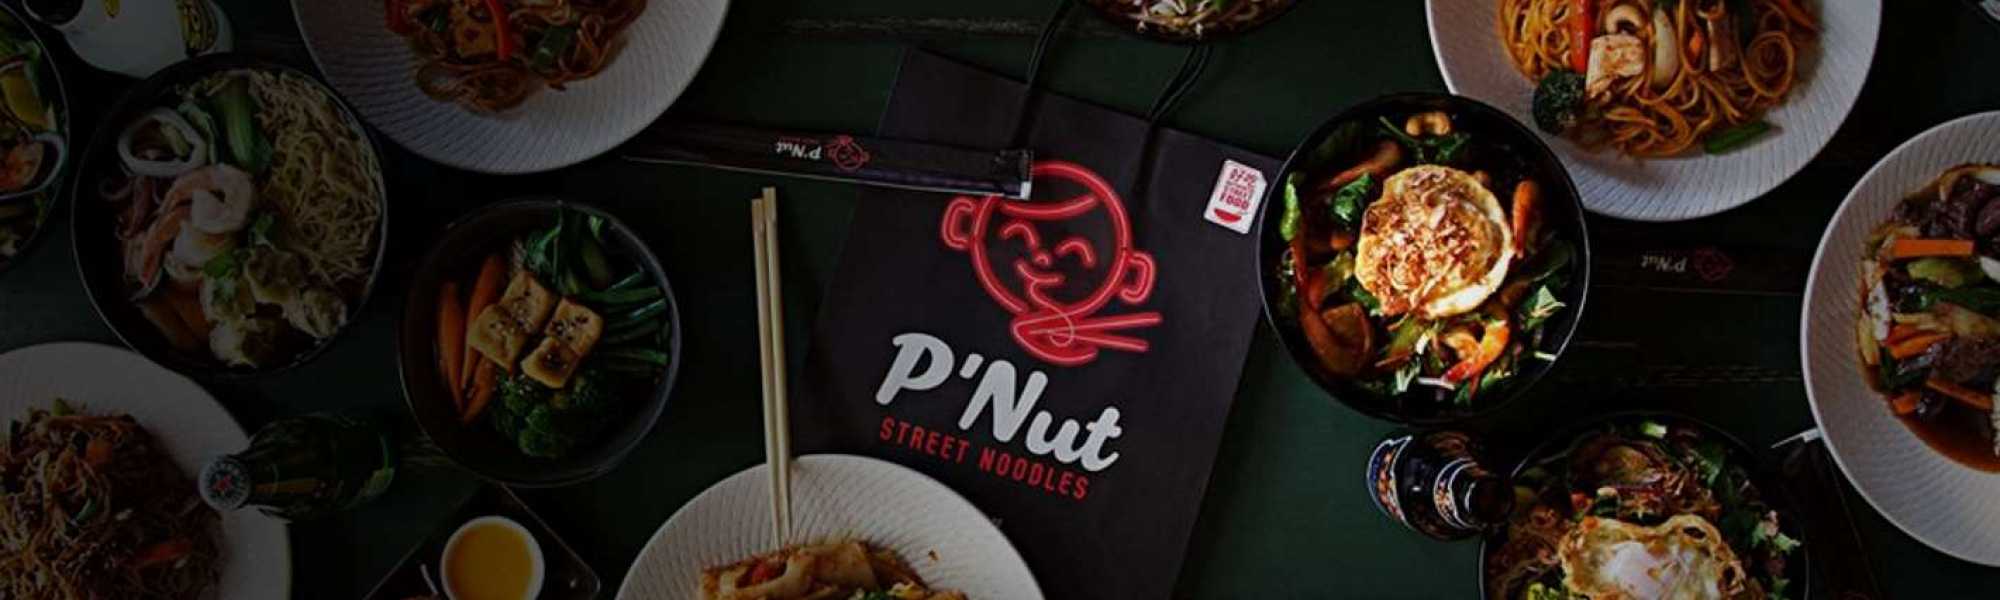 MENUS: P'Nut Street Noodles Sydney Olympic Park (Wok On ...